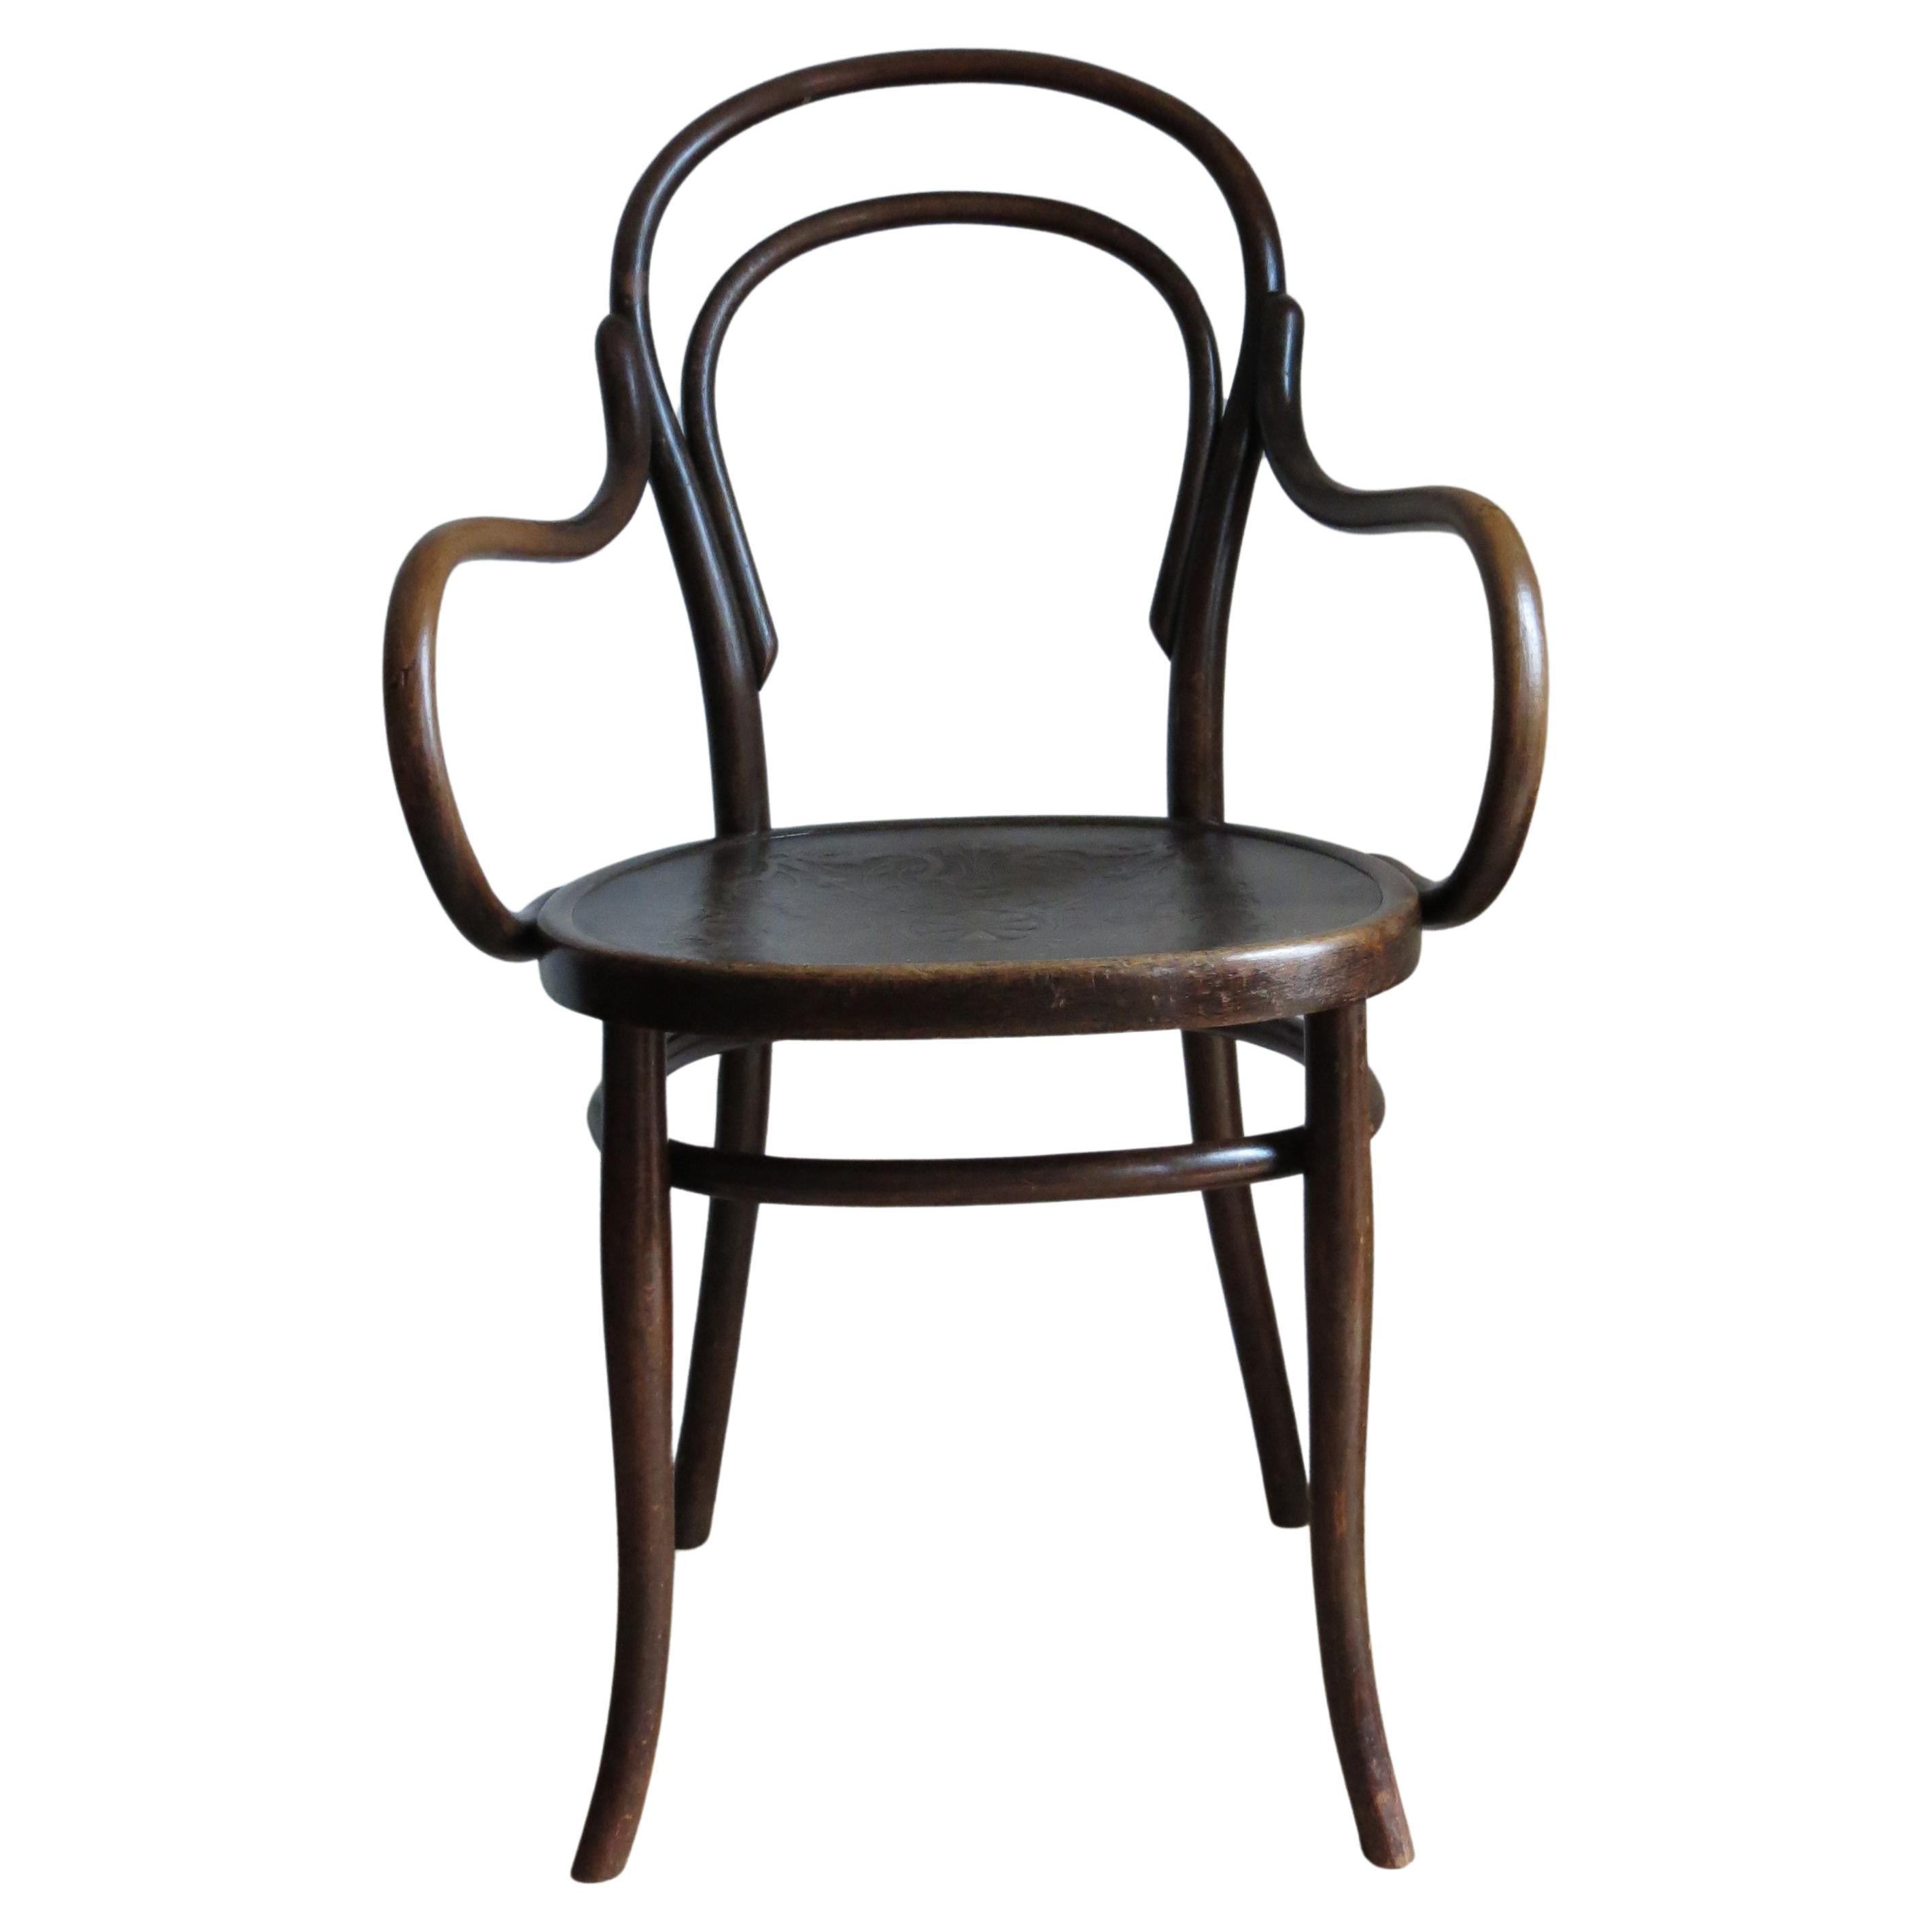 Bentwood Chair with arms Model No 14 Art Nouveau Chair Thonet Austria 1890 For Sale